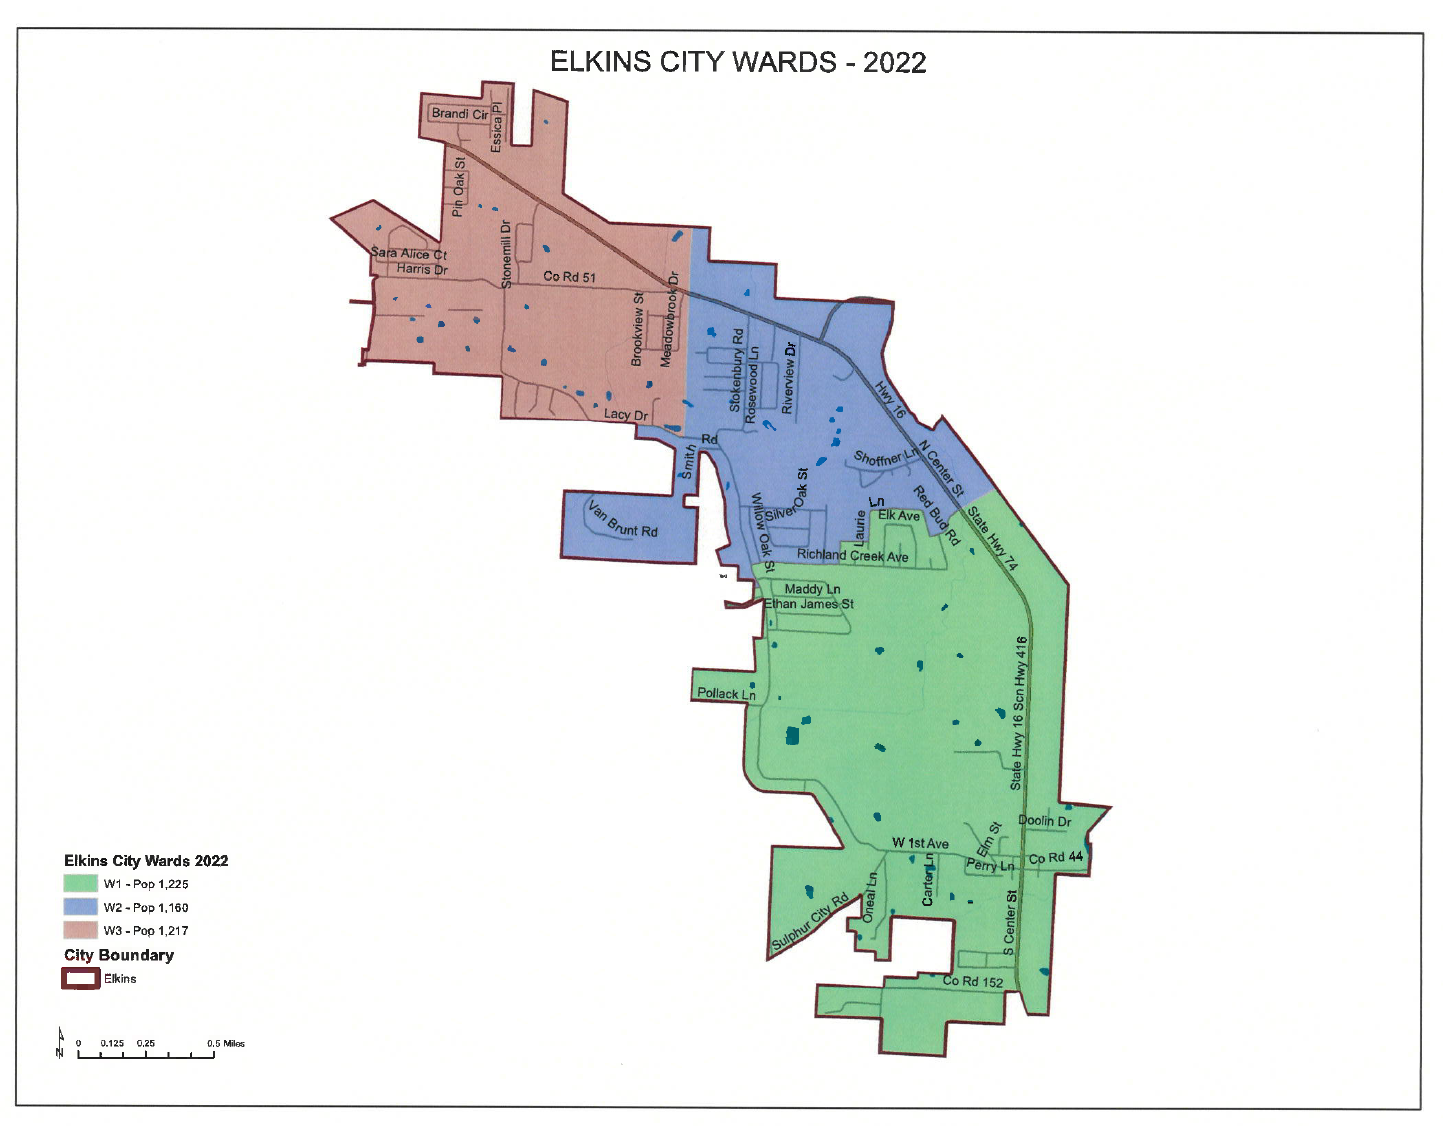 Ward map - legal description of boundaries follows